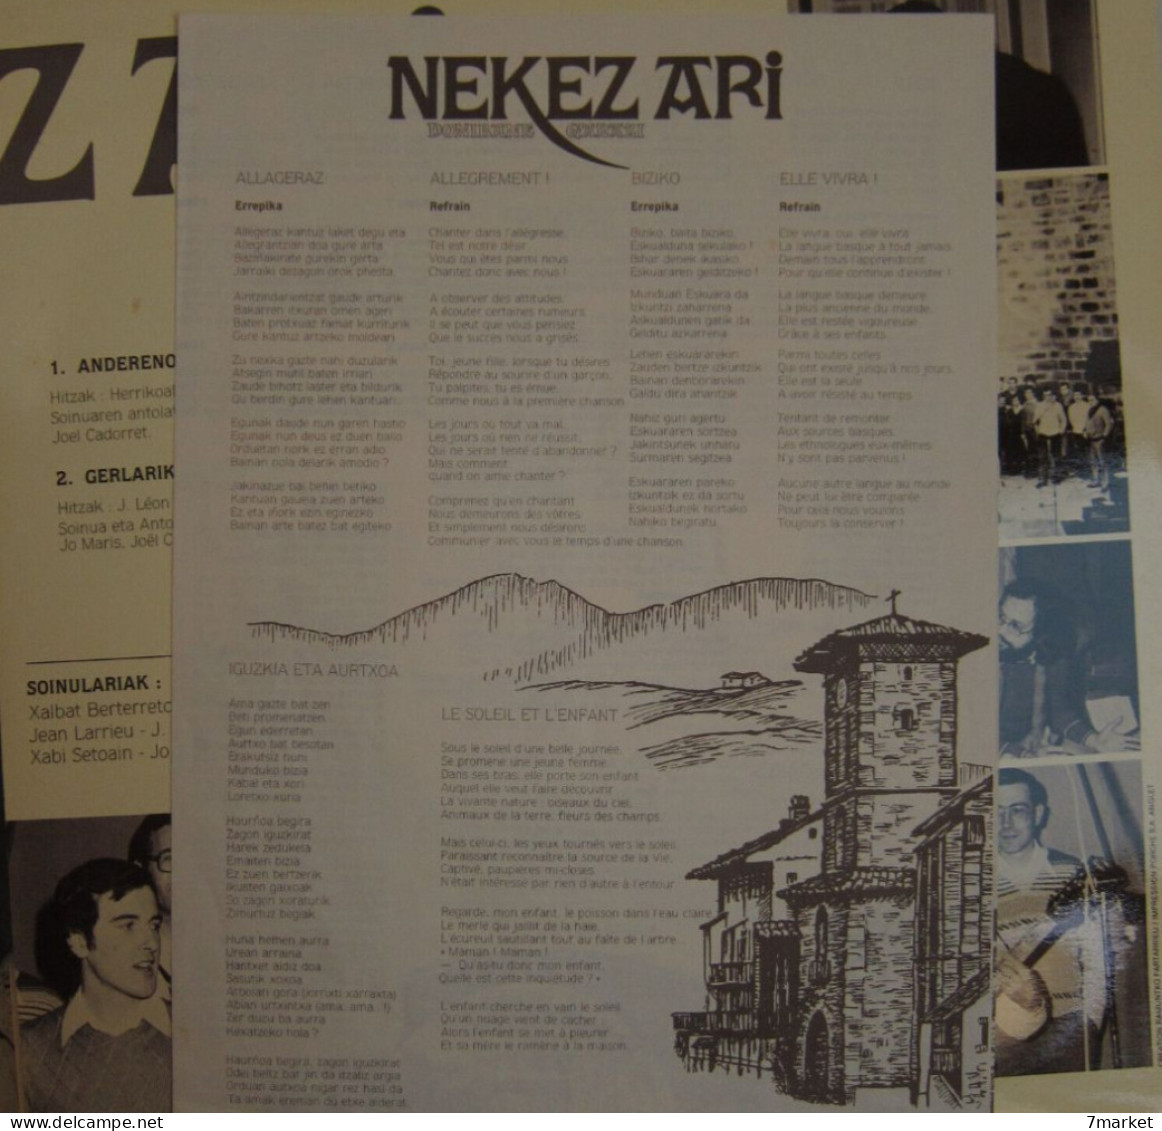 LP/  Nekez Ari - Donibane Garazi / Choeur Basque De St. Jean De Pied De Port - Wereldmuziek